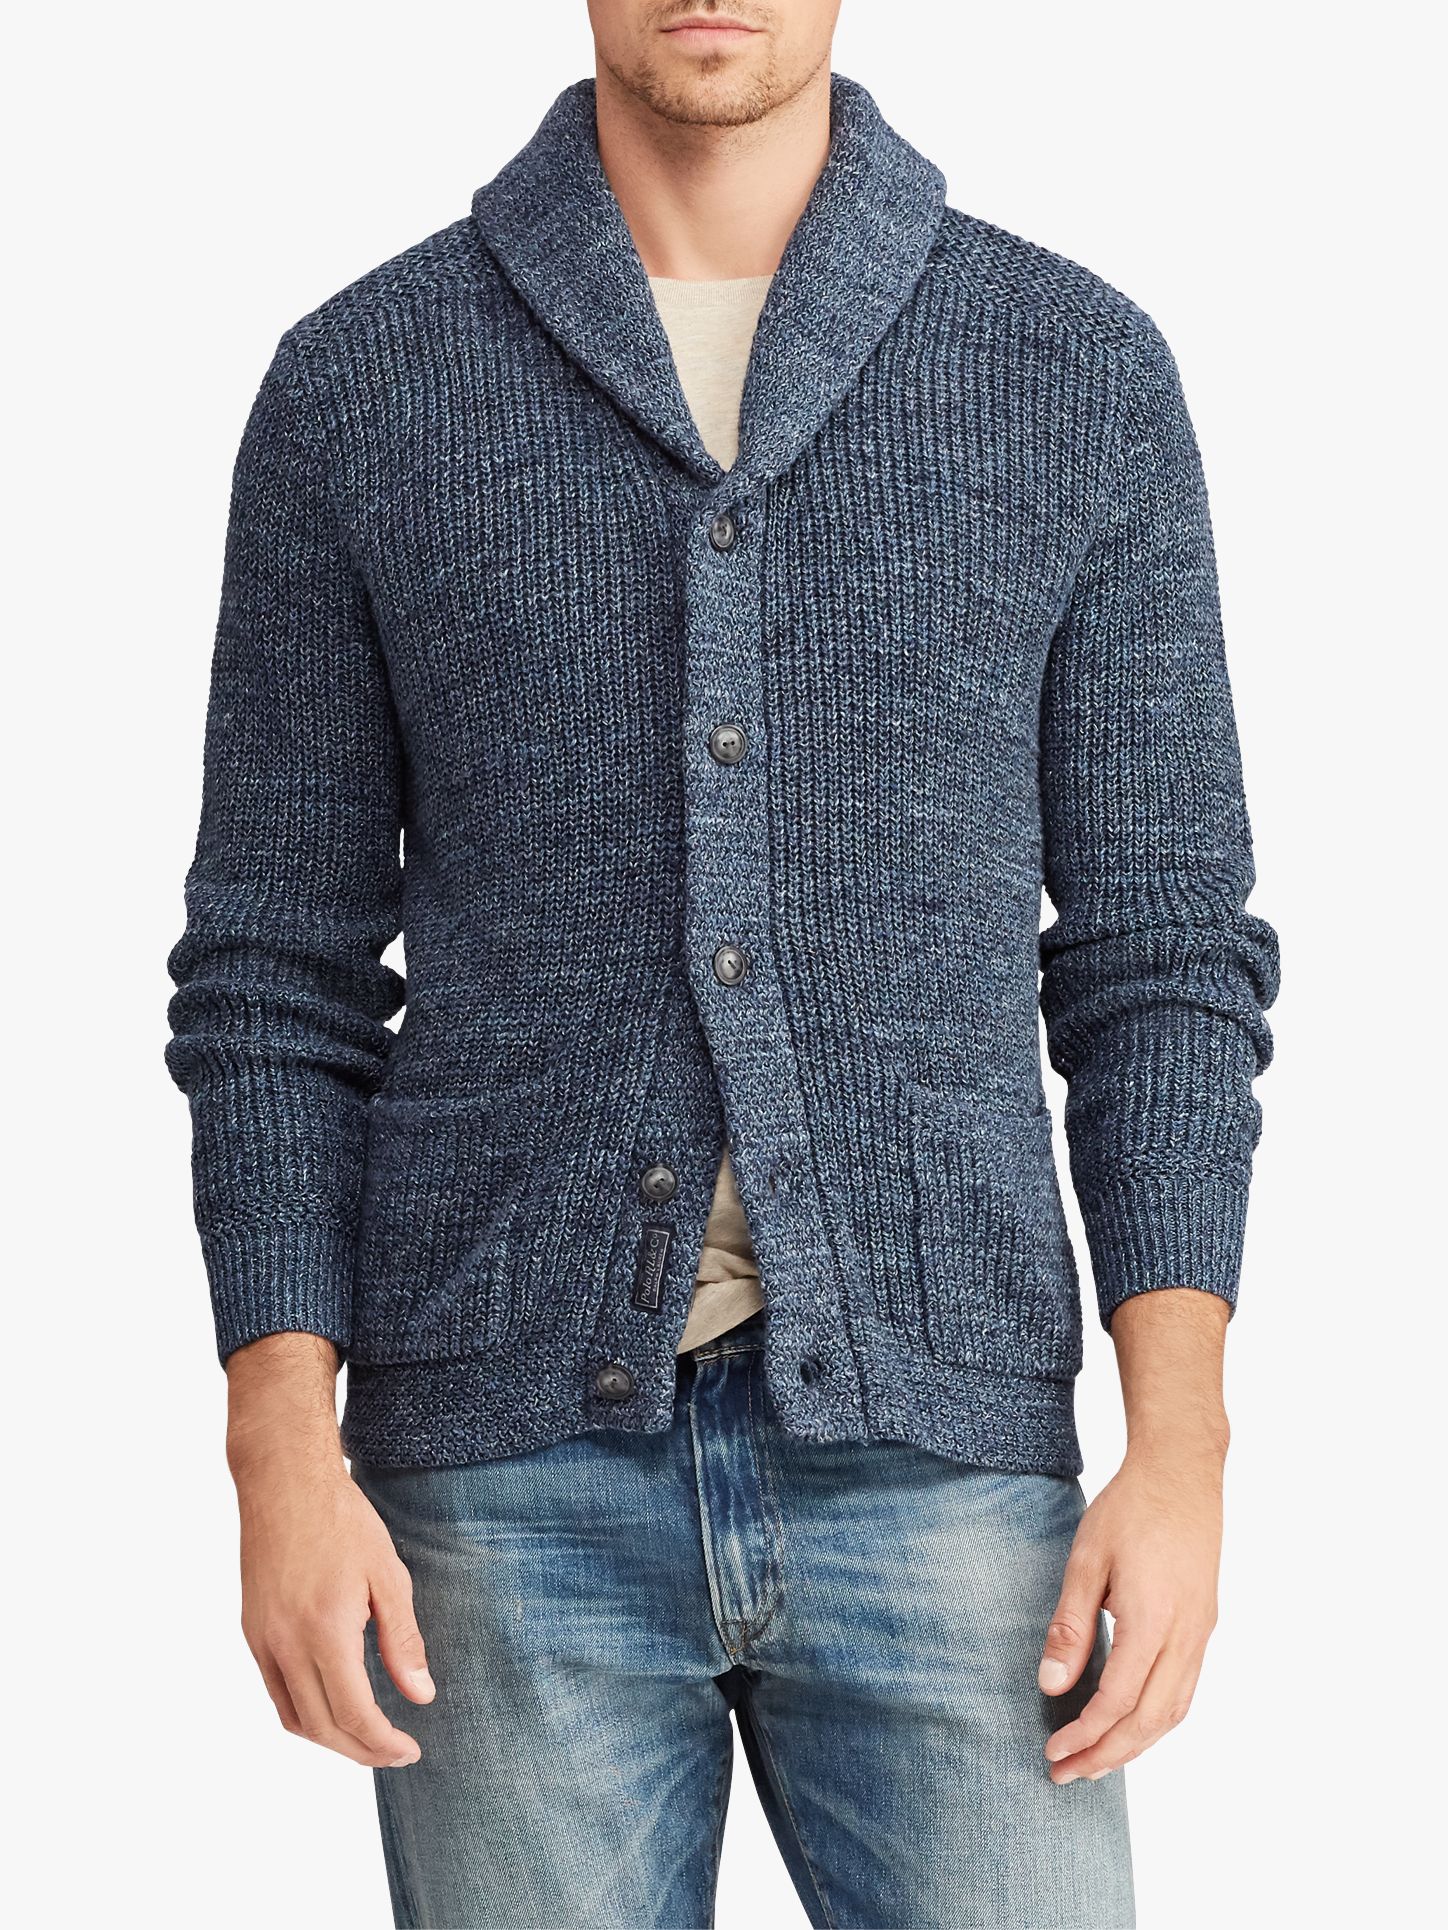 polo shawl sweater